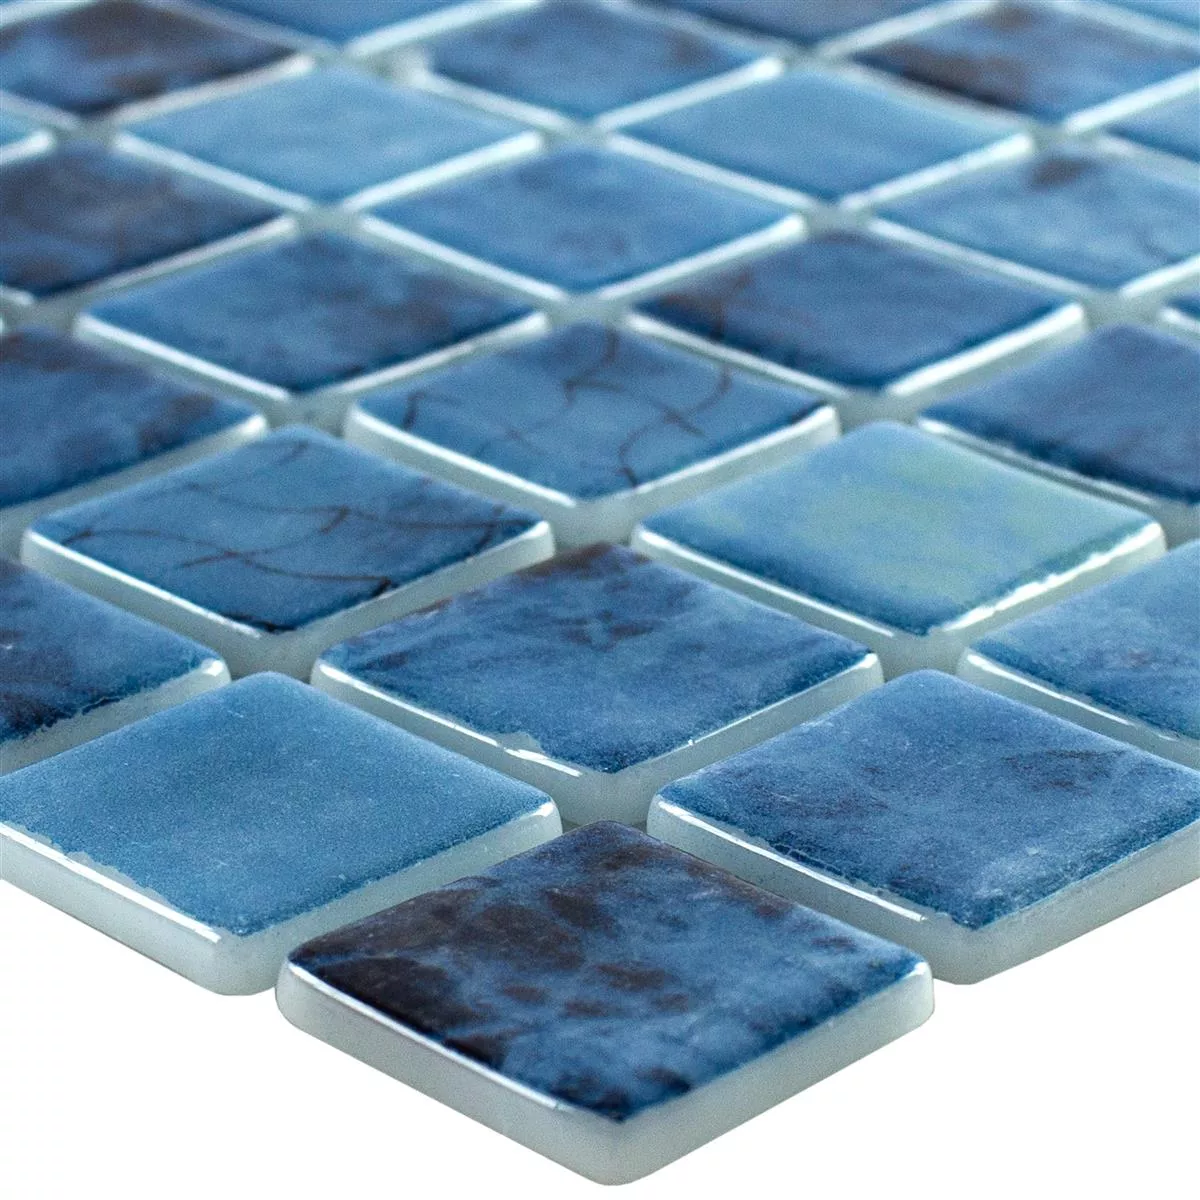 Swimmingpool Mosaik Baltic Blå 25x25mm